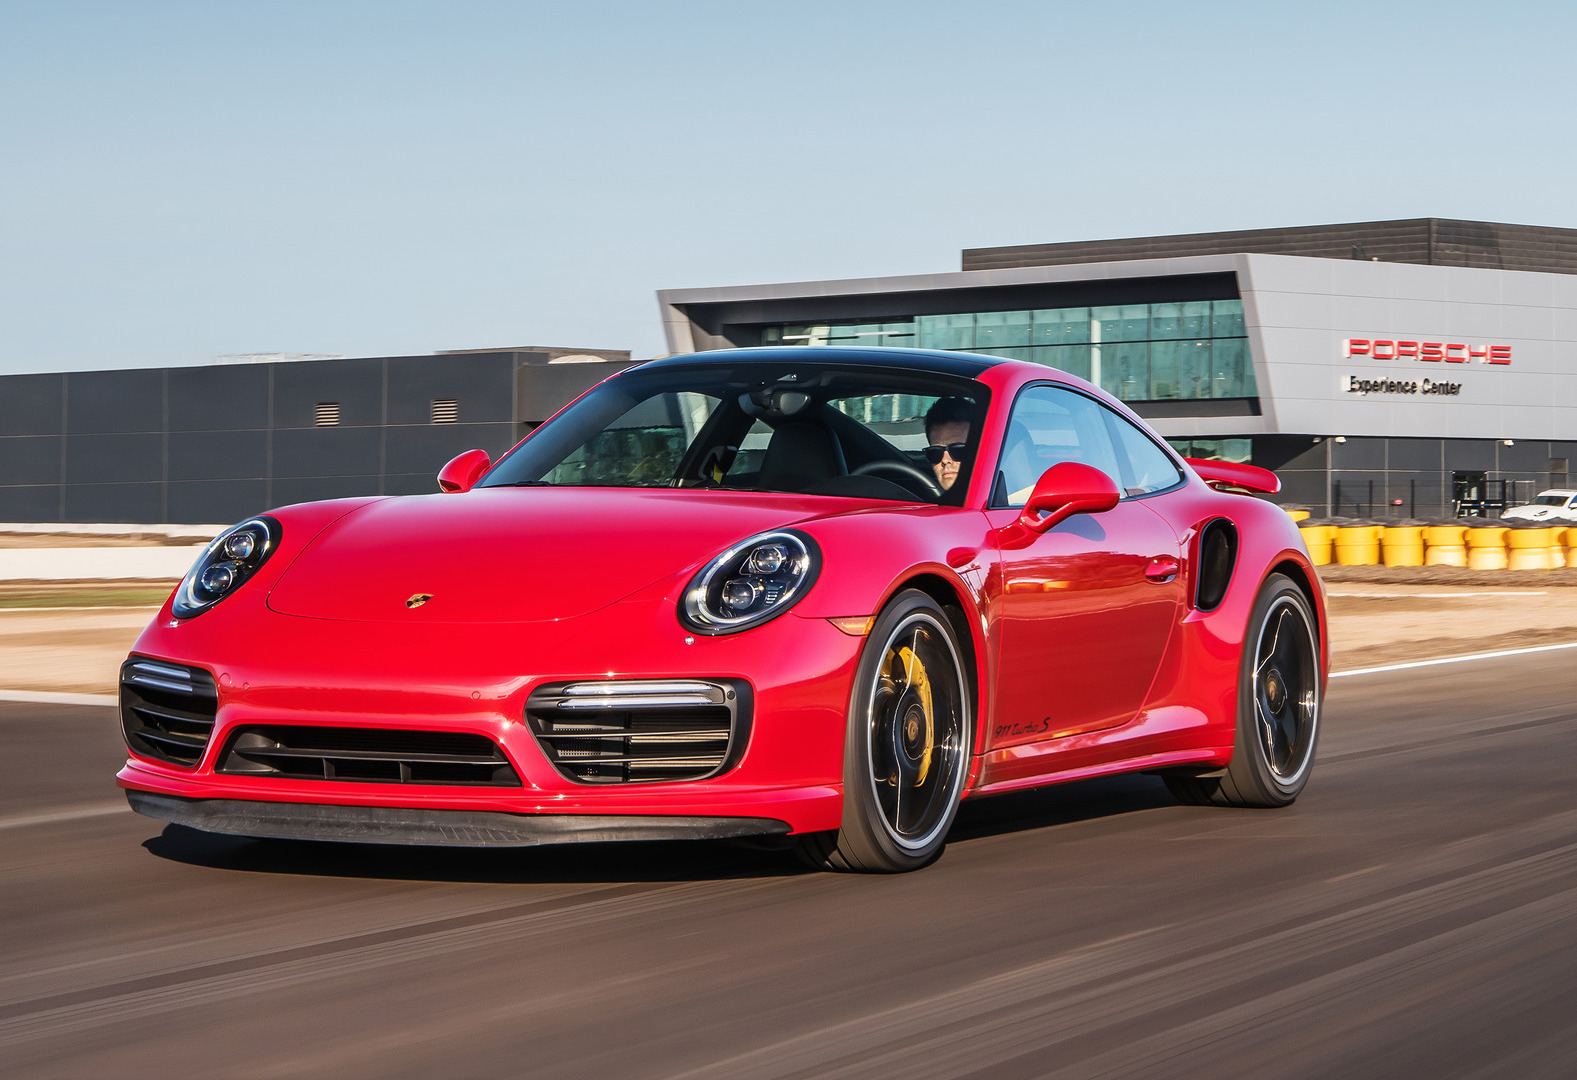 Porsche opens new driving playground in California